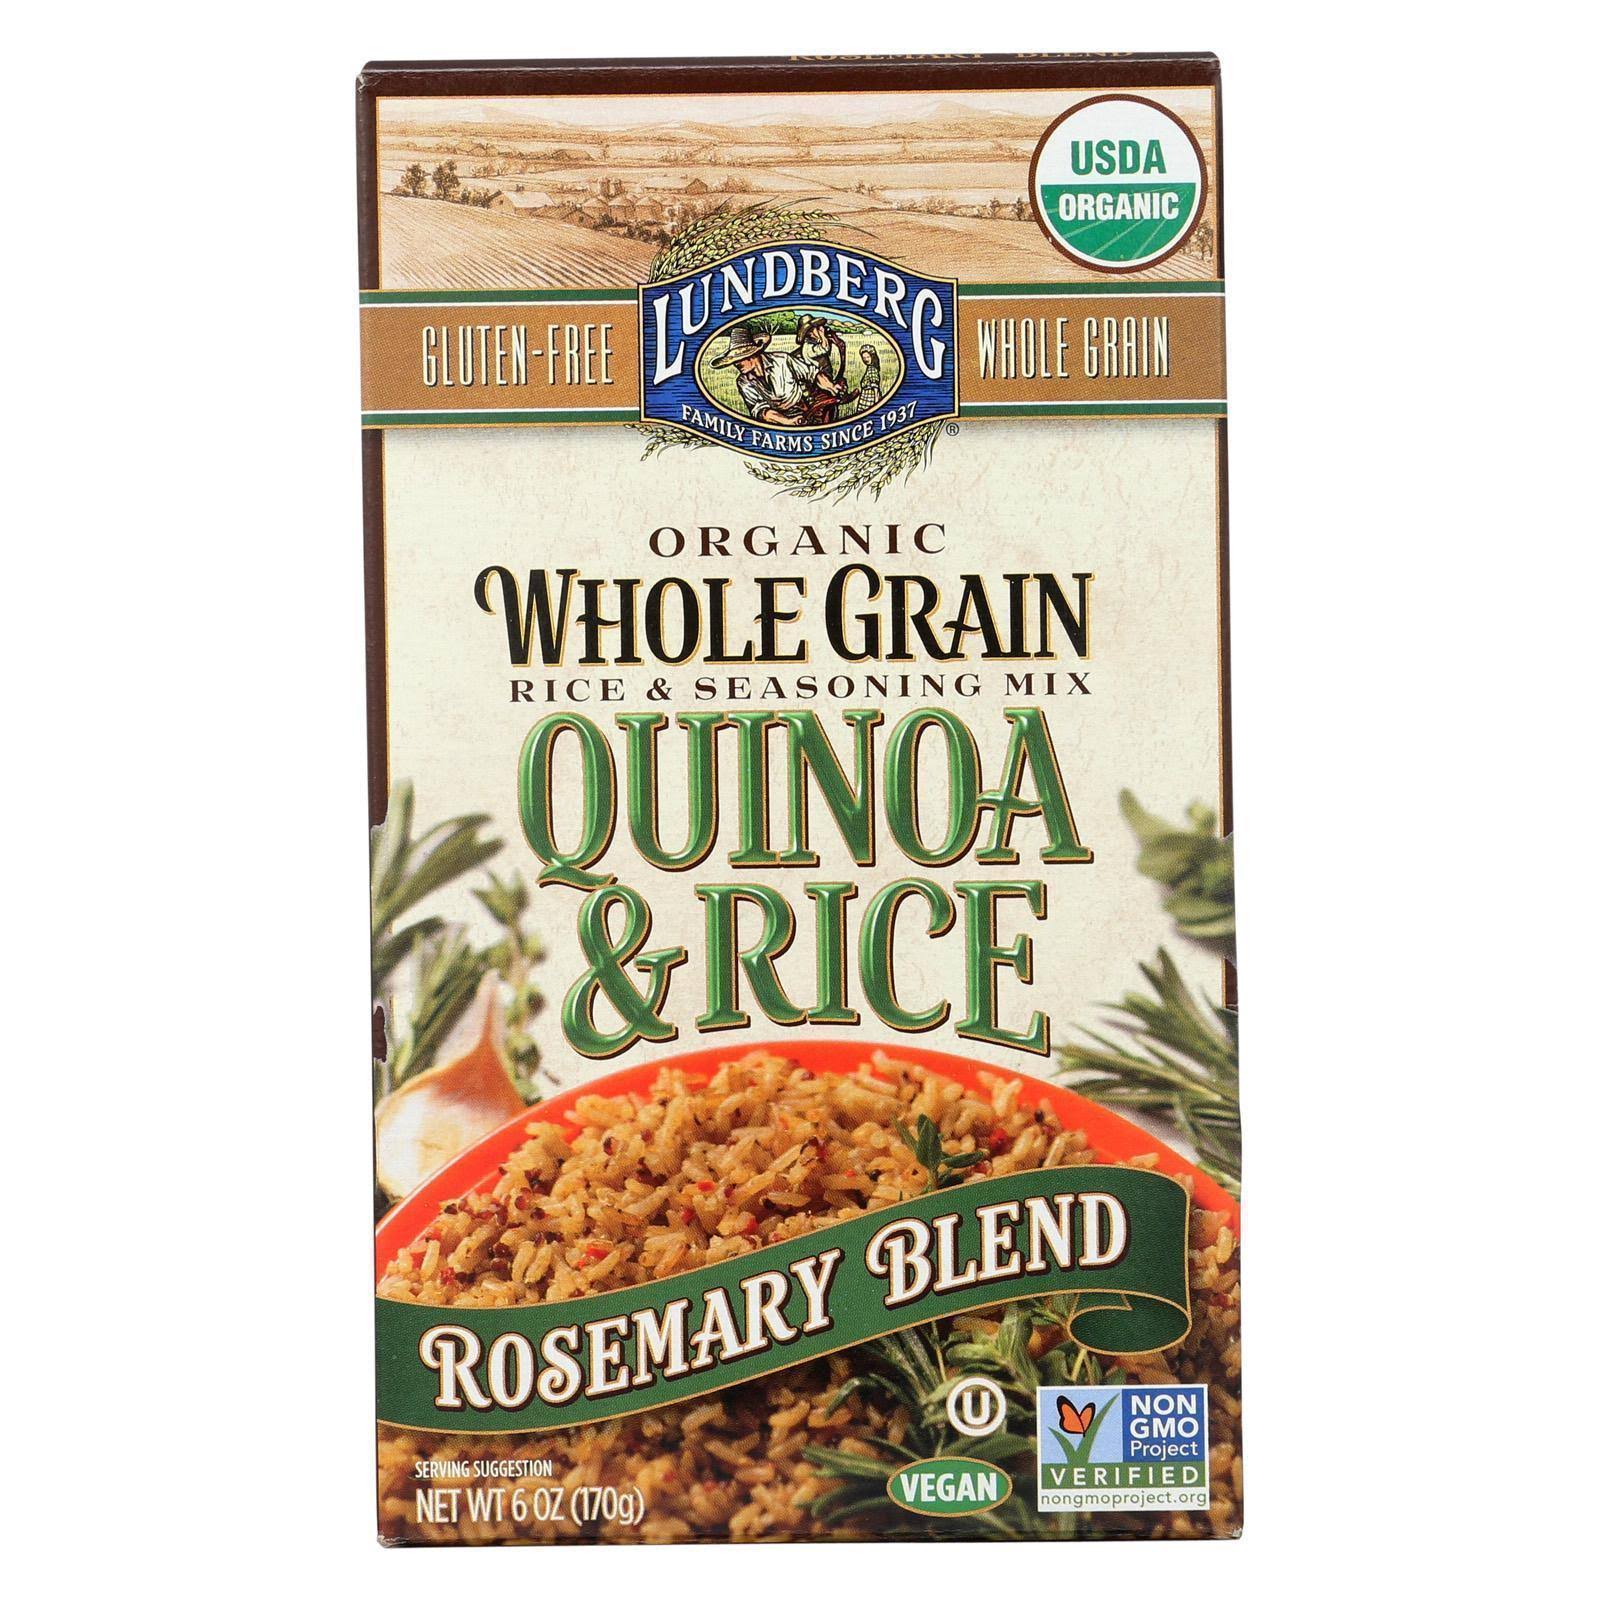 Lundberg Organic Whole Grain Rice & Seasoning Mix - Rosemary Blend